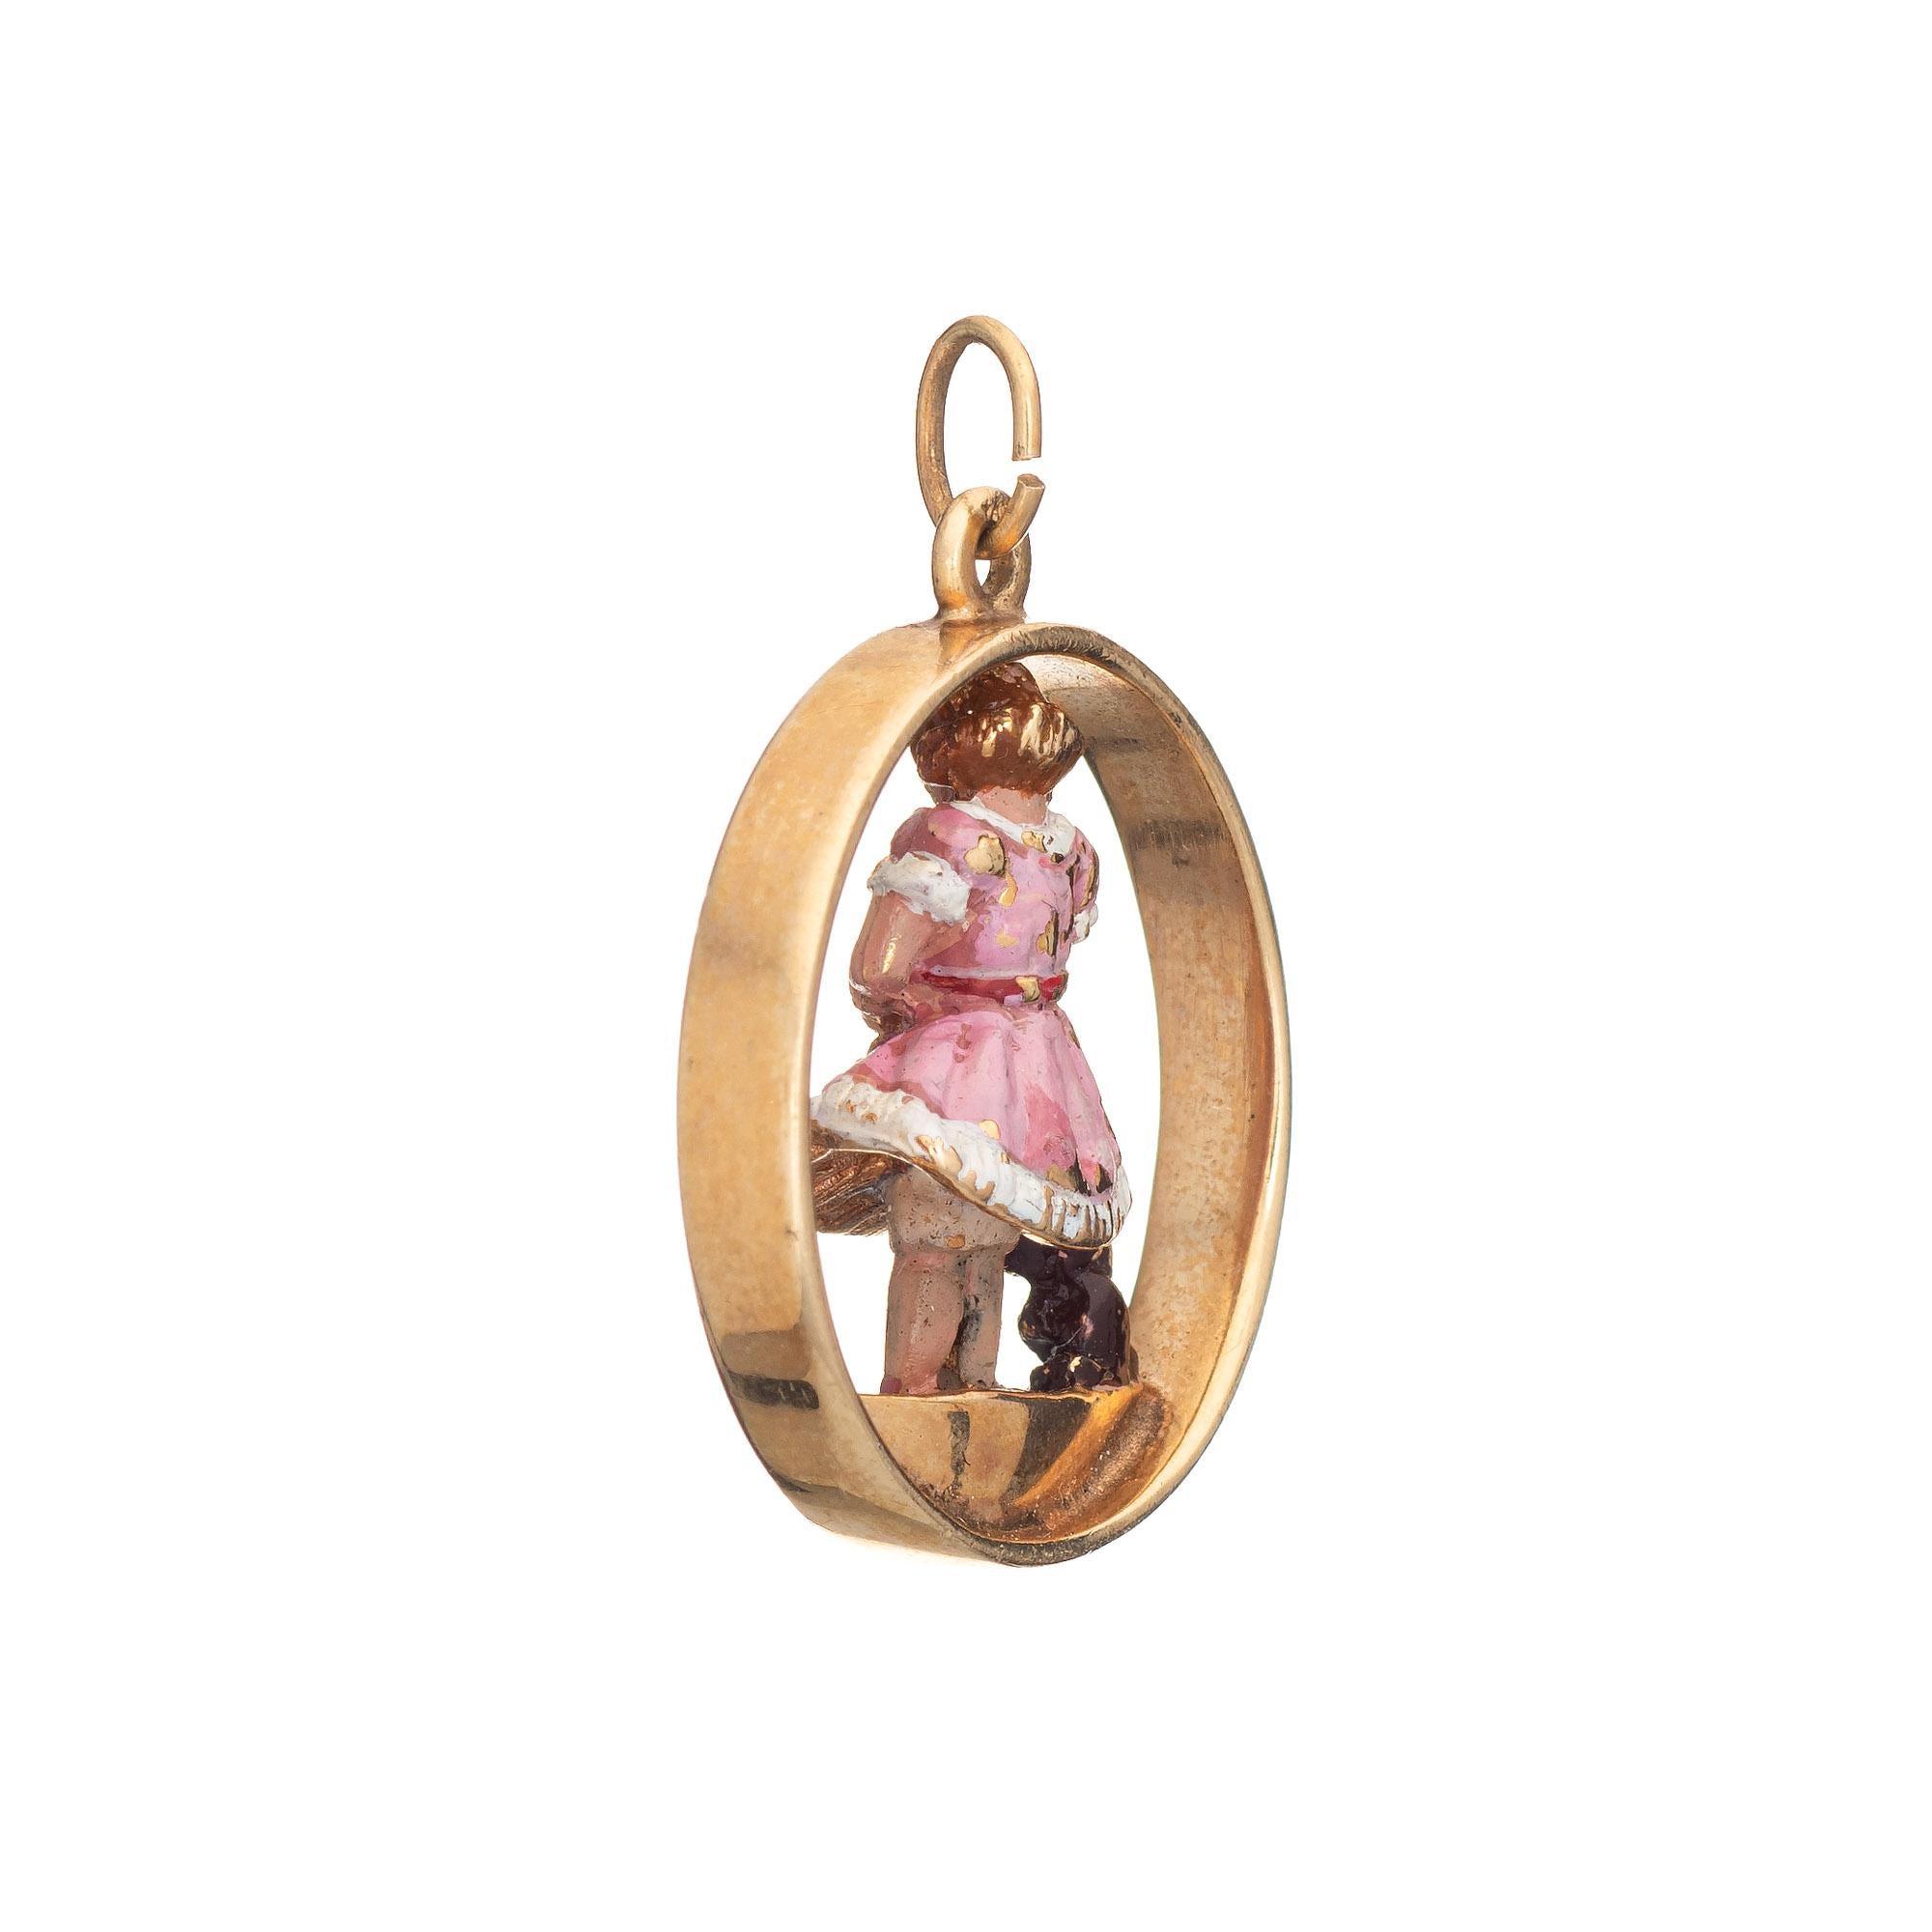 Retro Young Child with Dog Vintage Charm 14k Gold Enamel Pendant Estate Fine Jewelry